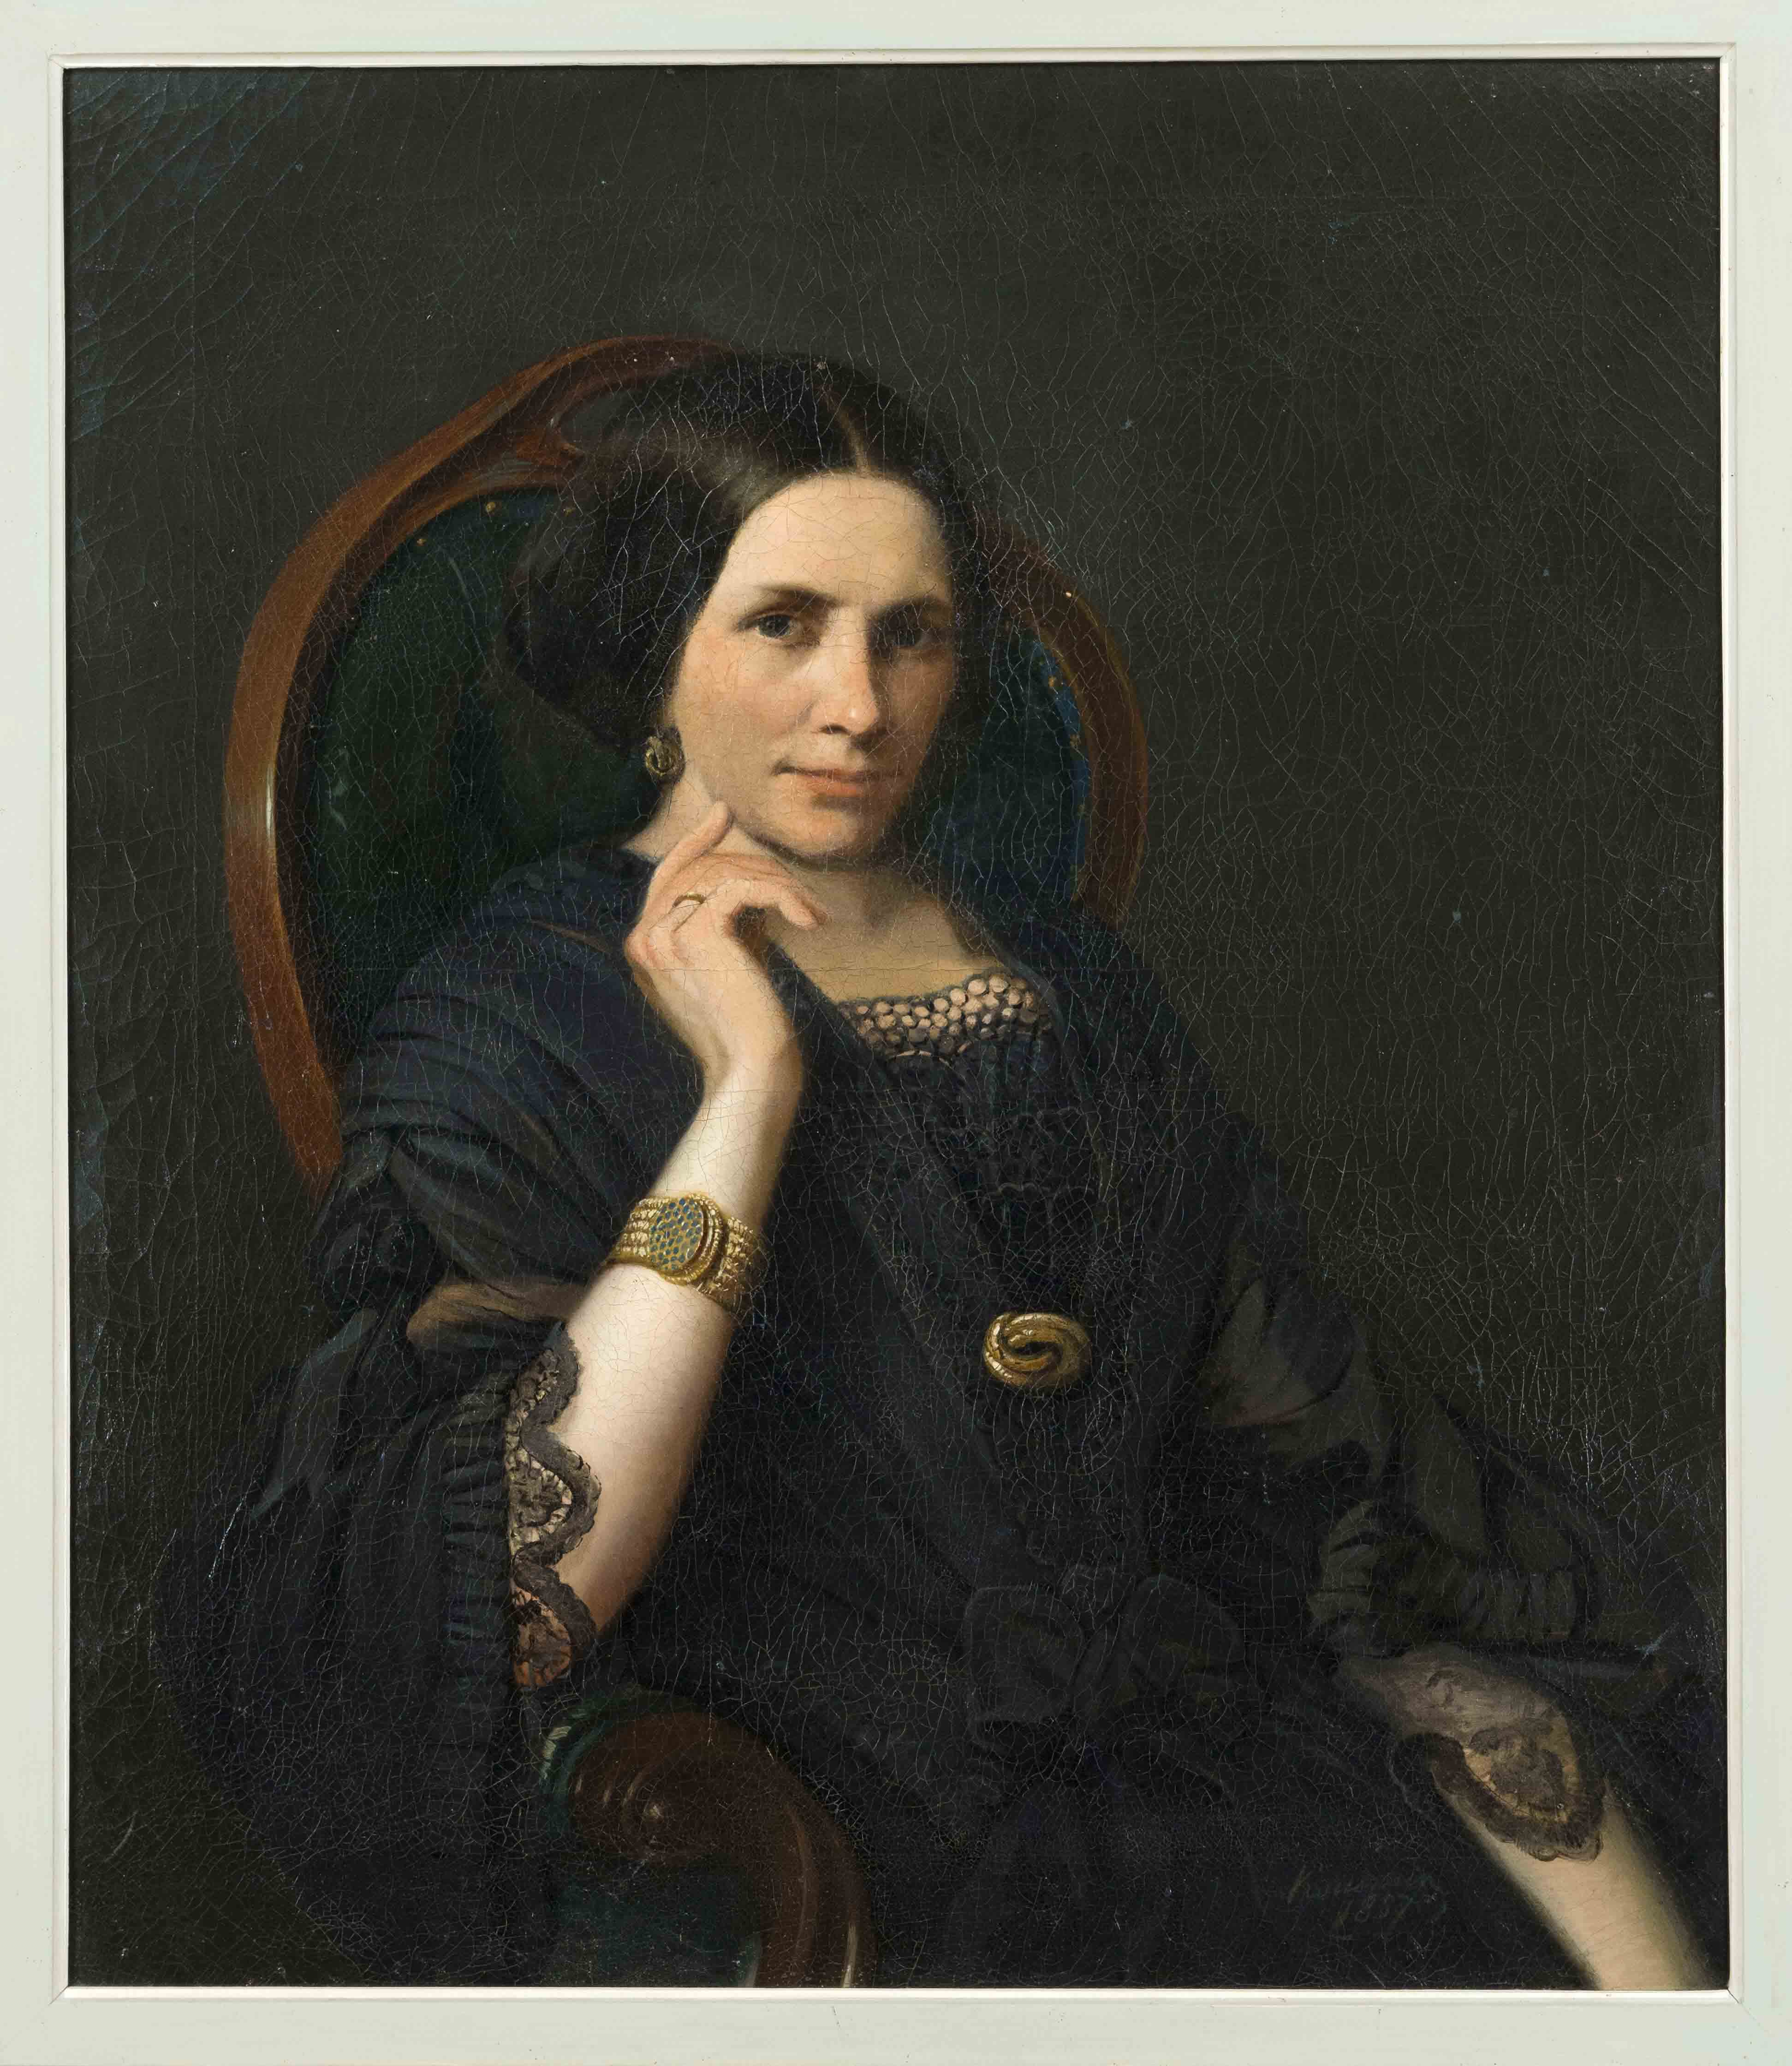 signed Kousmin (?), portrait painter mid-19th century, Portrait of a woman in black, oil on